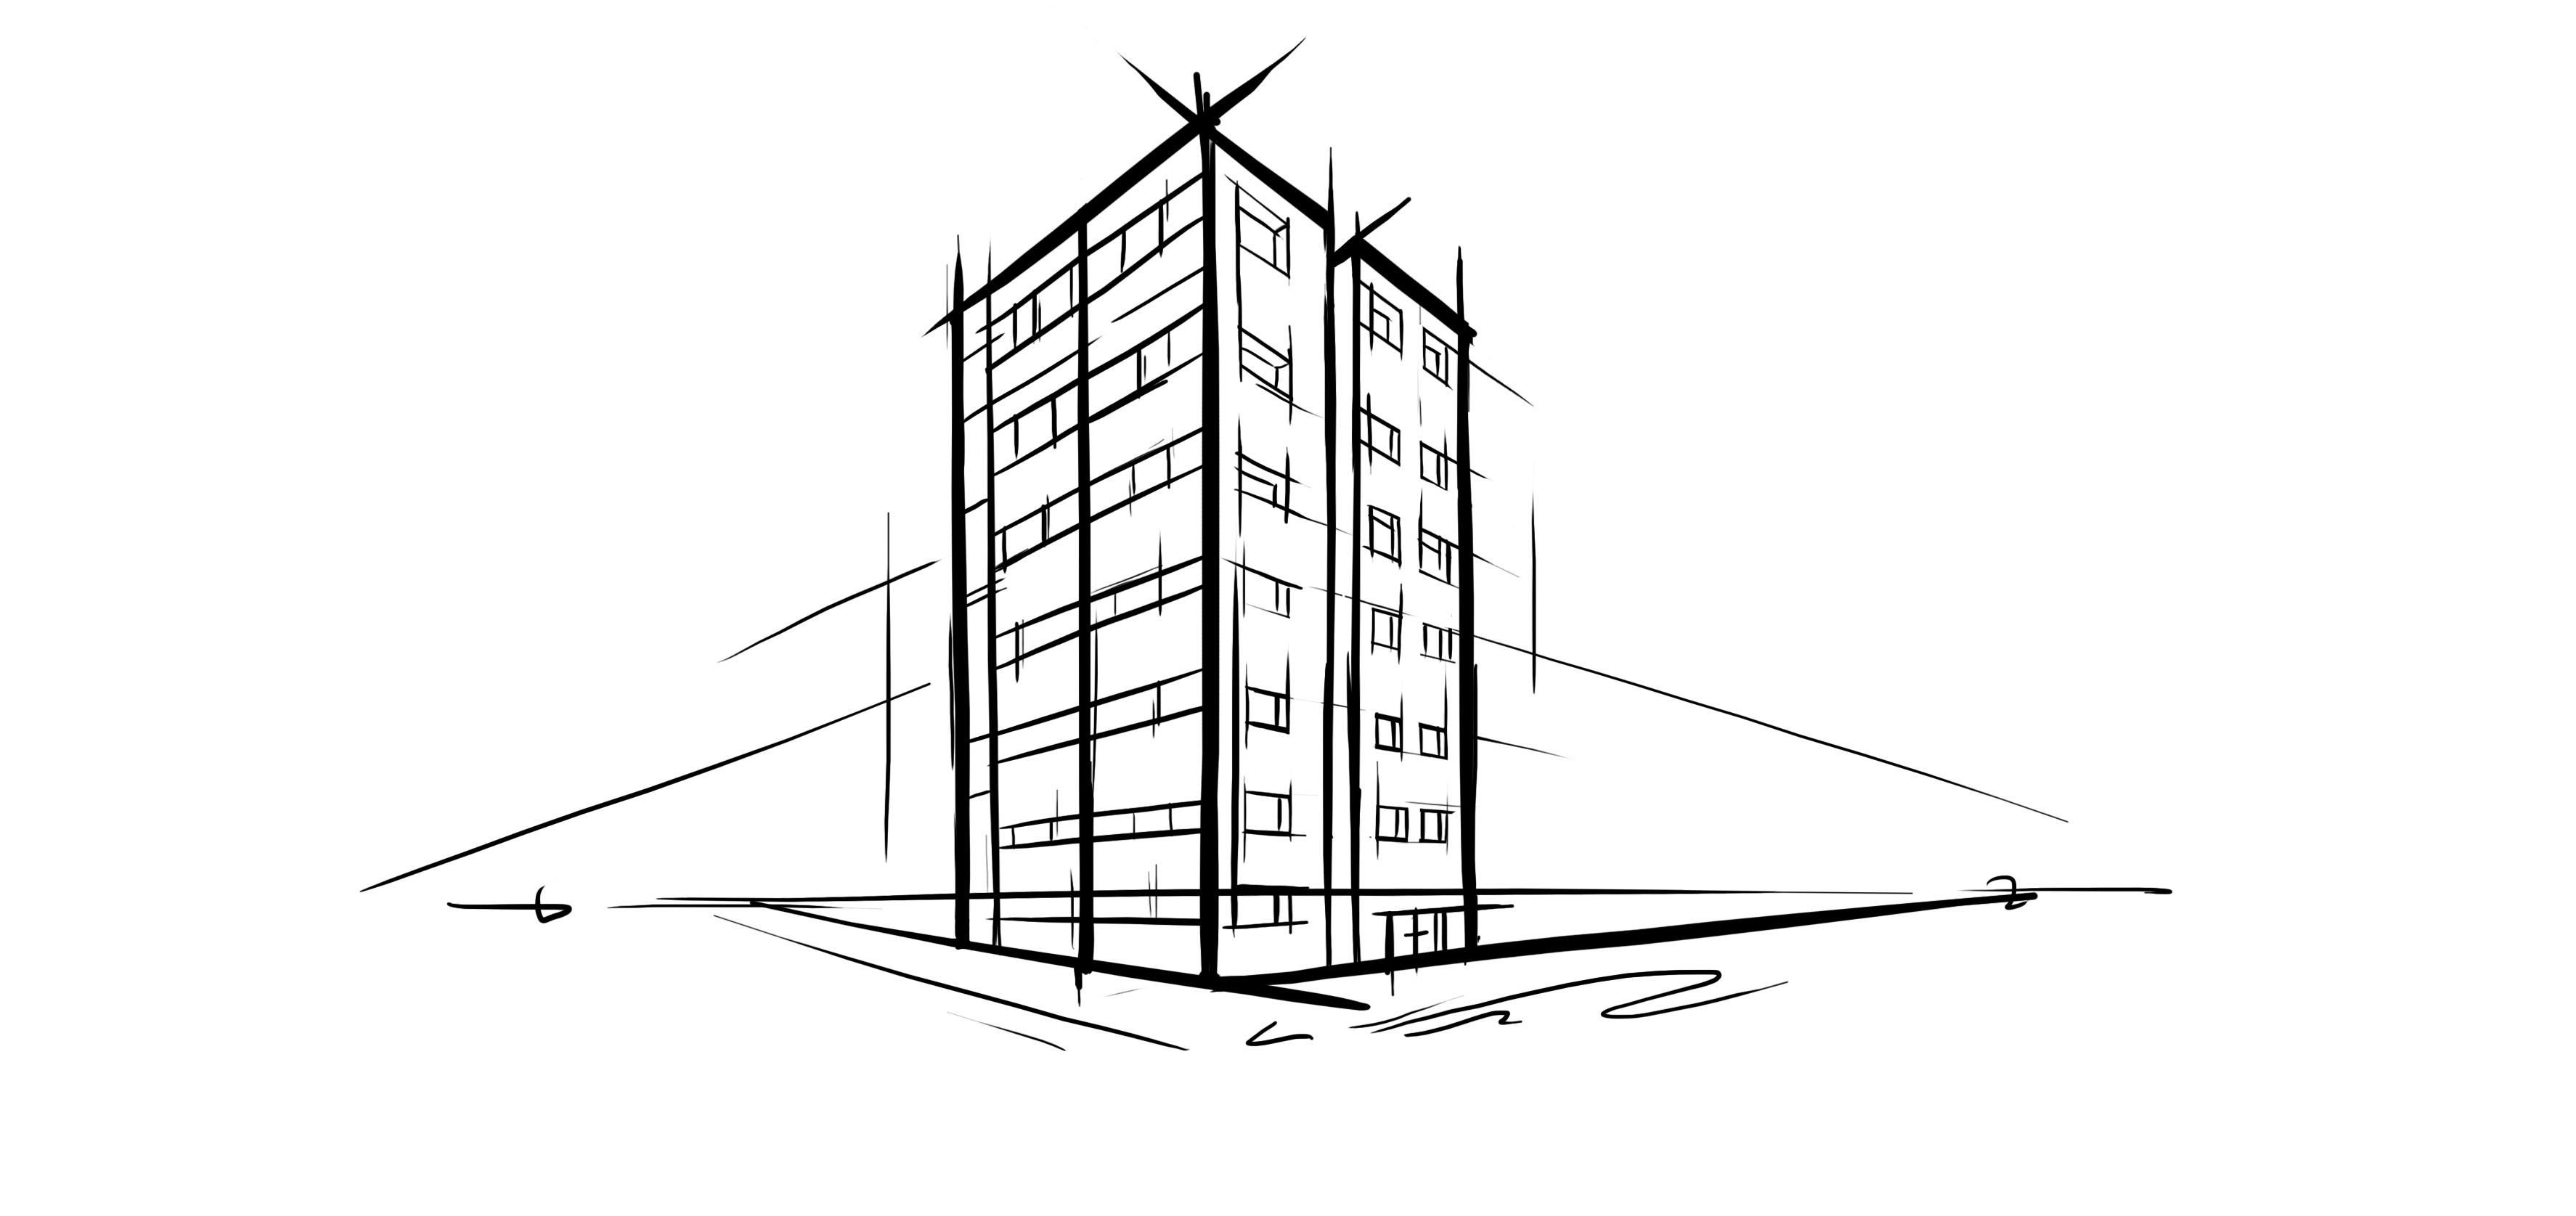 High rise sketch - large TIFF
Building